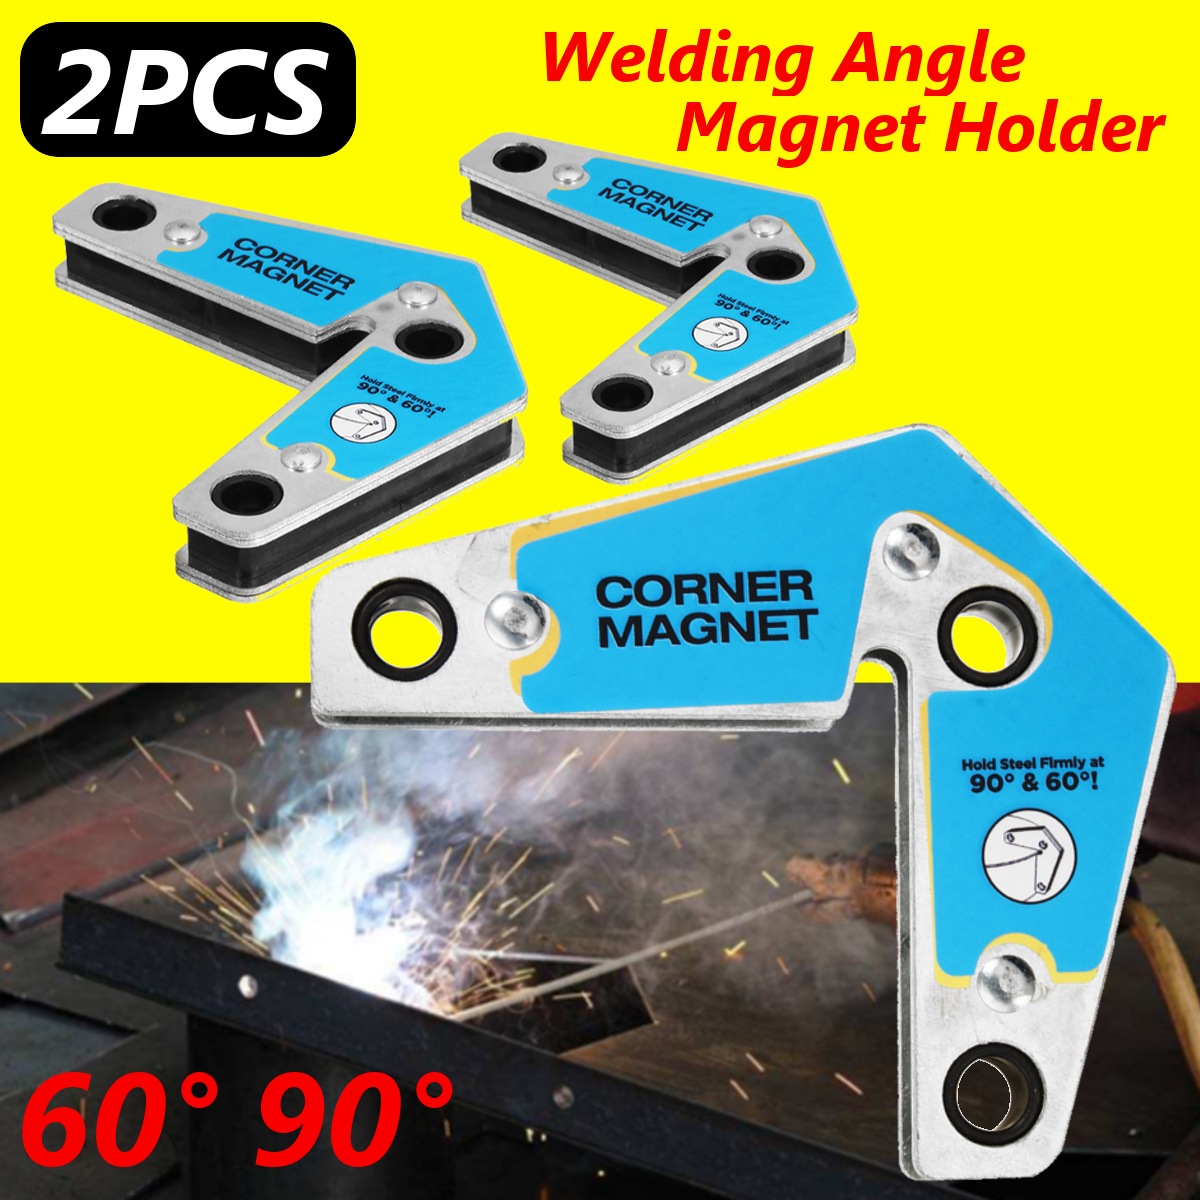 2pcs-Magnetic-Welding-Holders-Corner-Magnet-Holder-Dual-Use-6090-Degree-Soldering-Tools-1379167-1